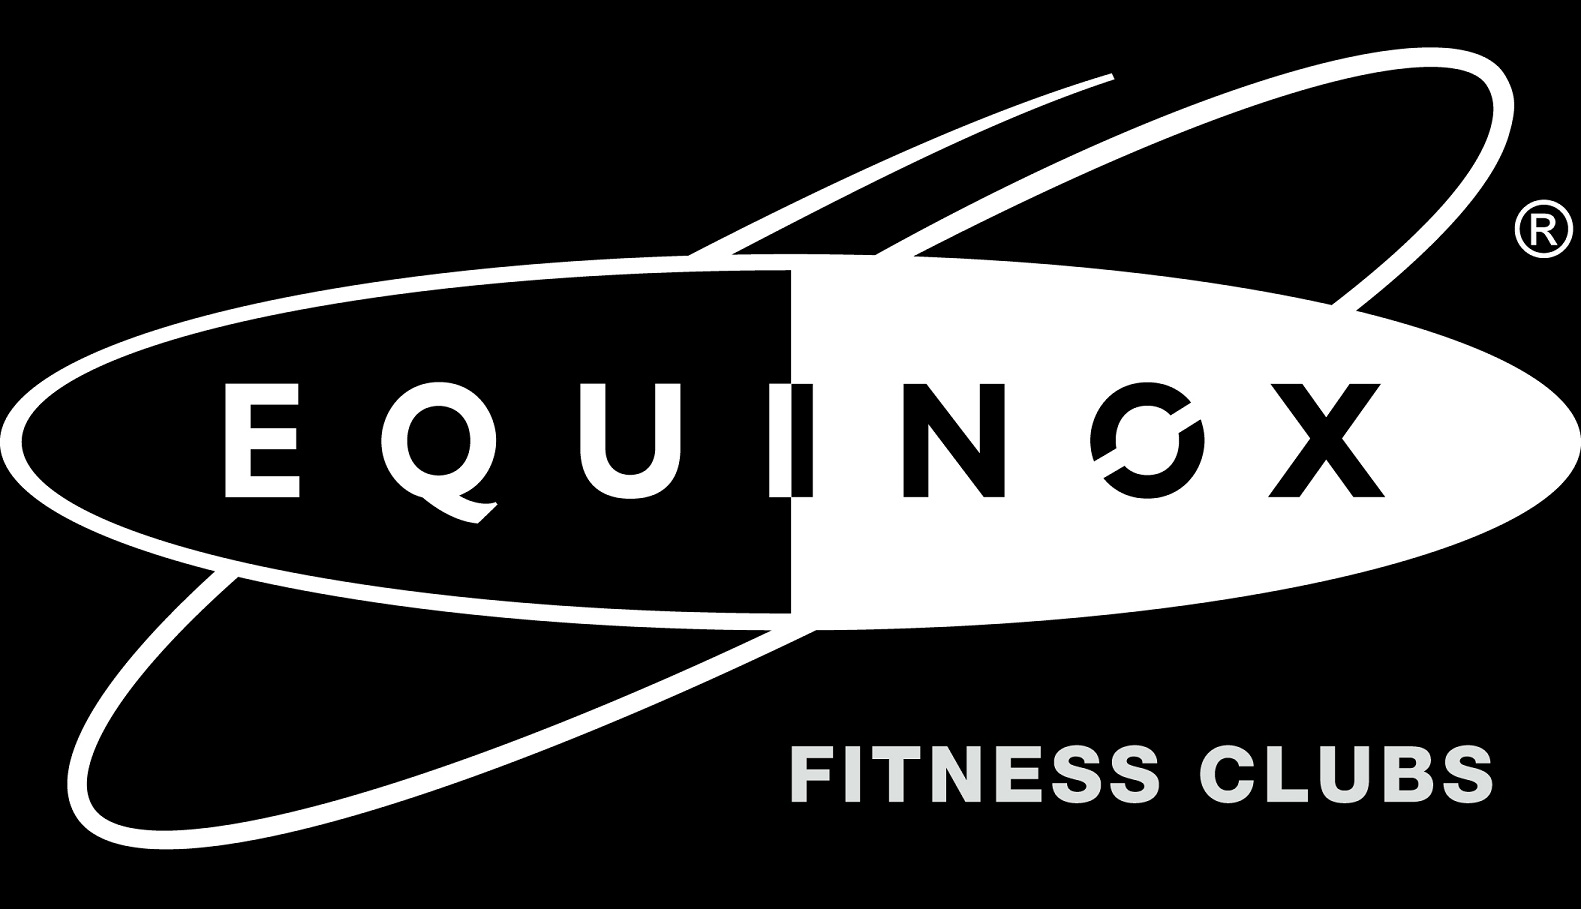 Equinox Fitness Club Palo Alto Hillhouse Construction